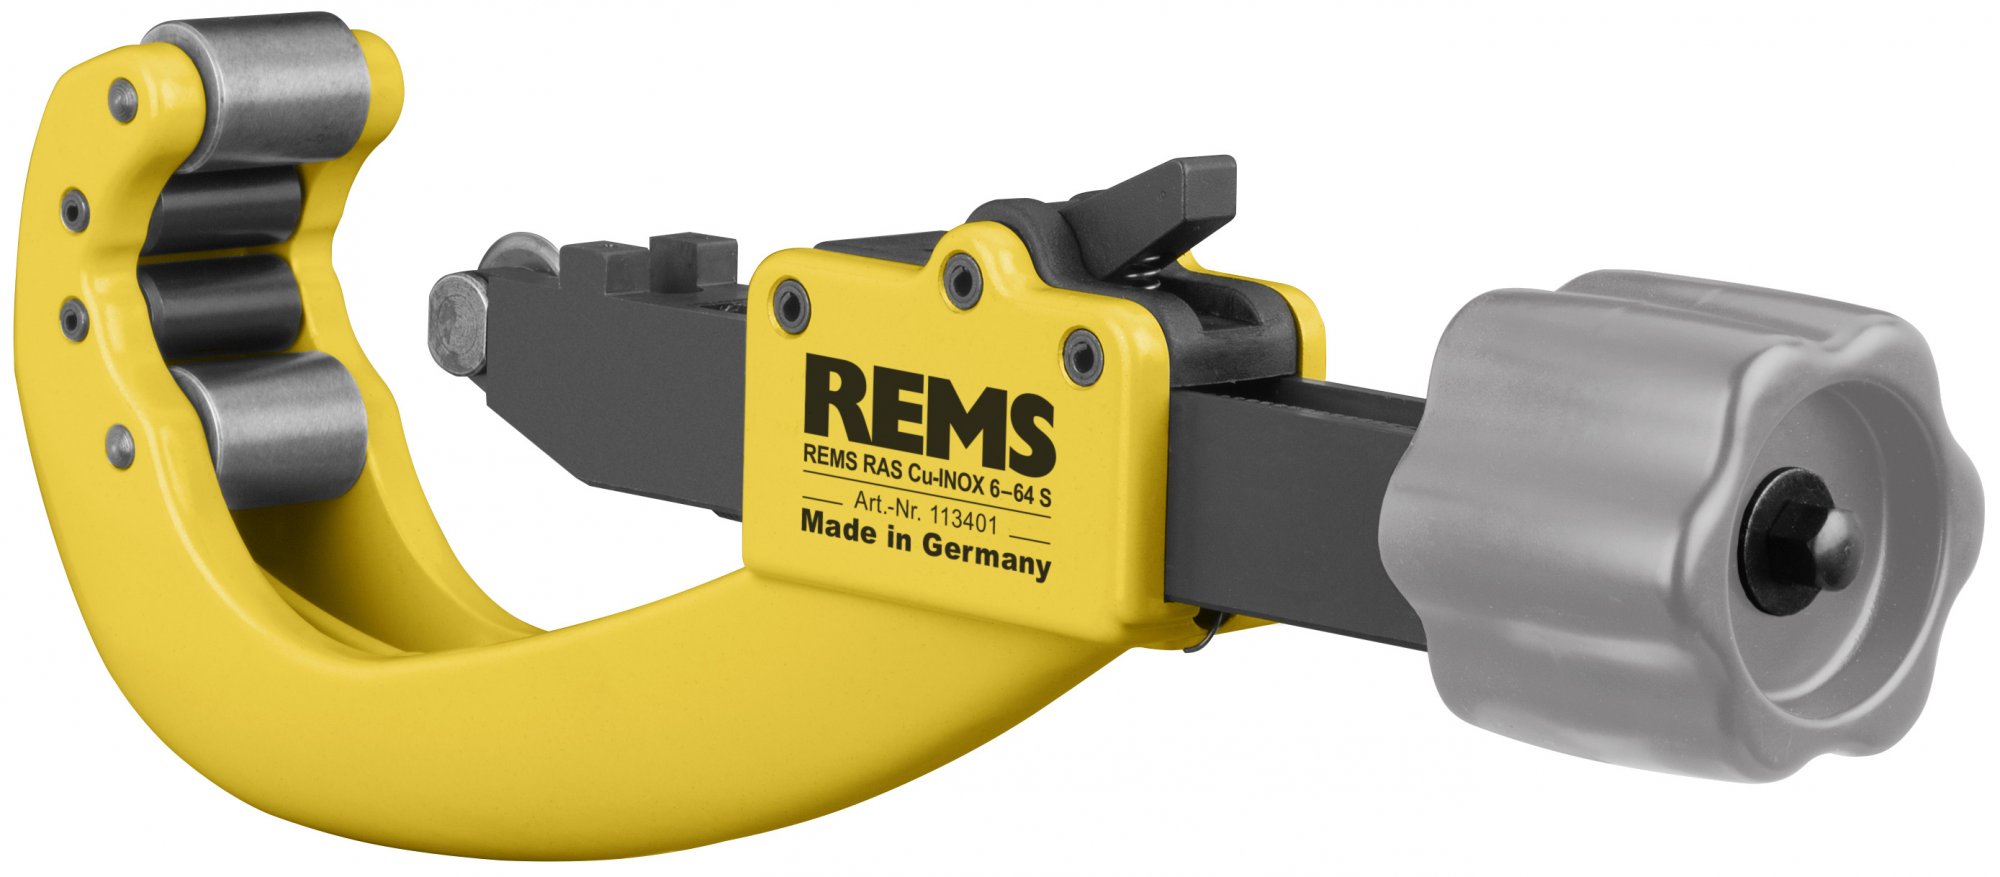 Rems RAS Cu-INOX 8-64 S Pijpsnijder - 8-64mm